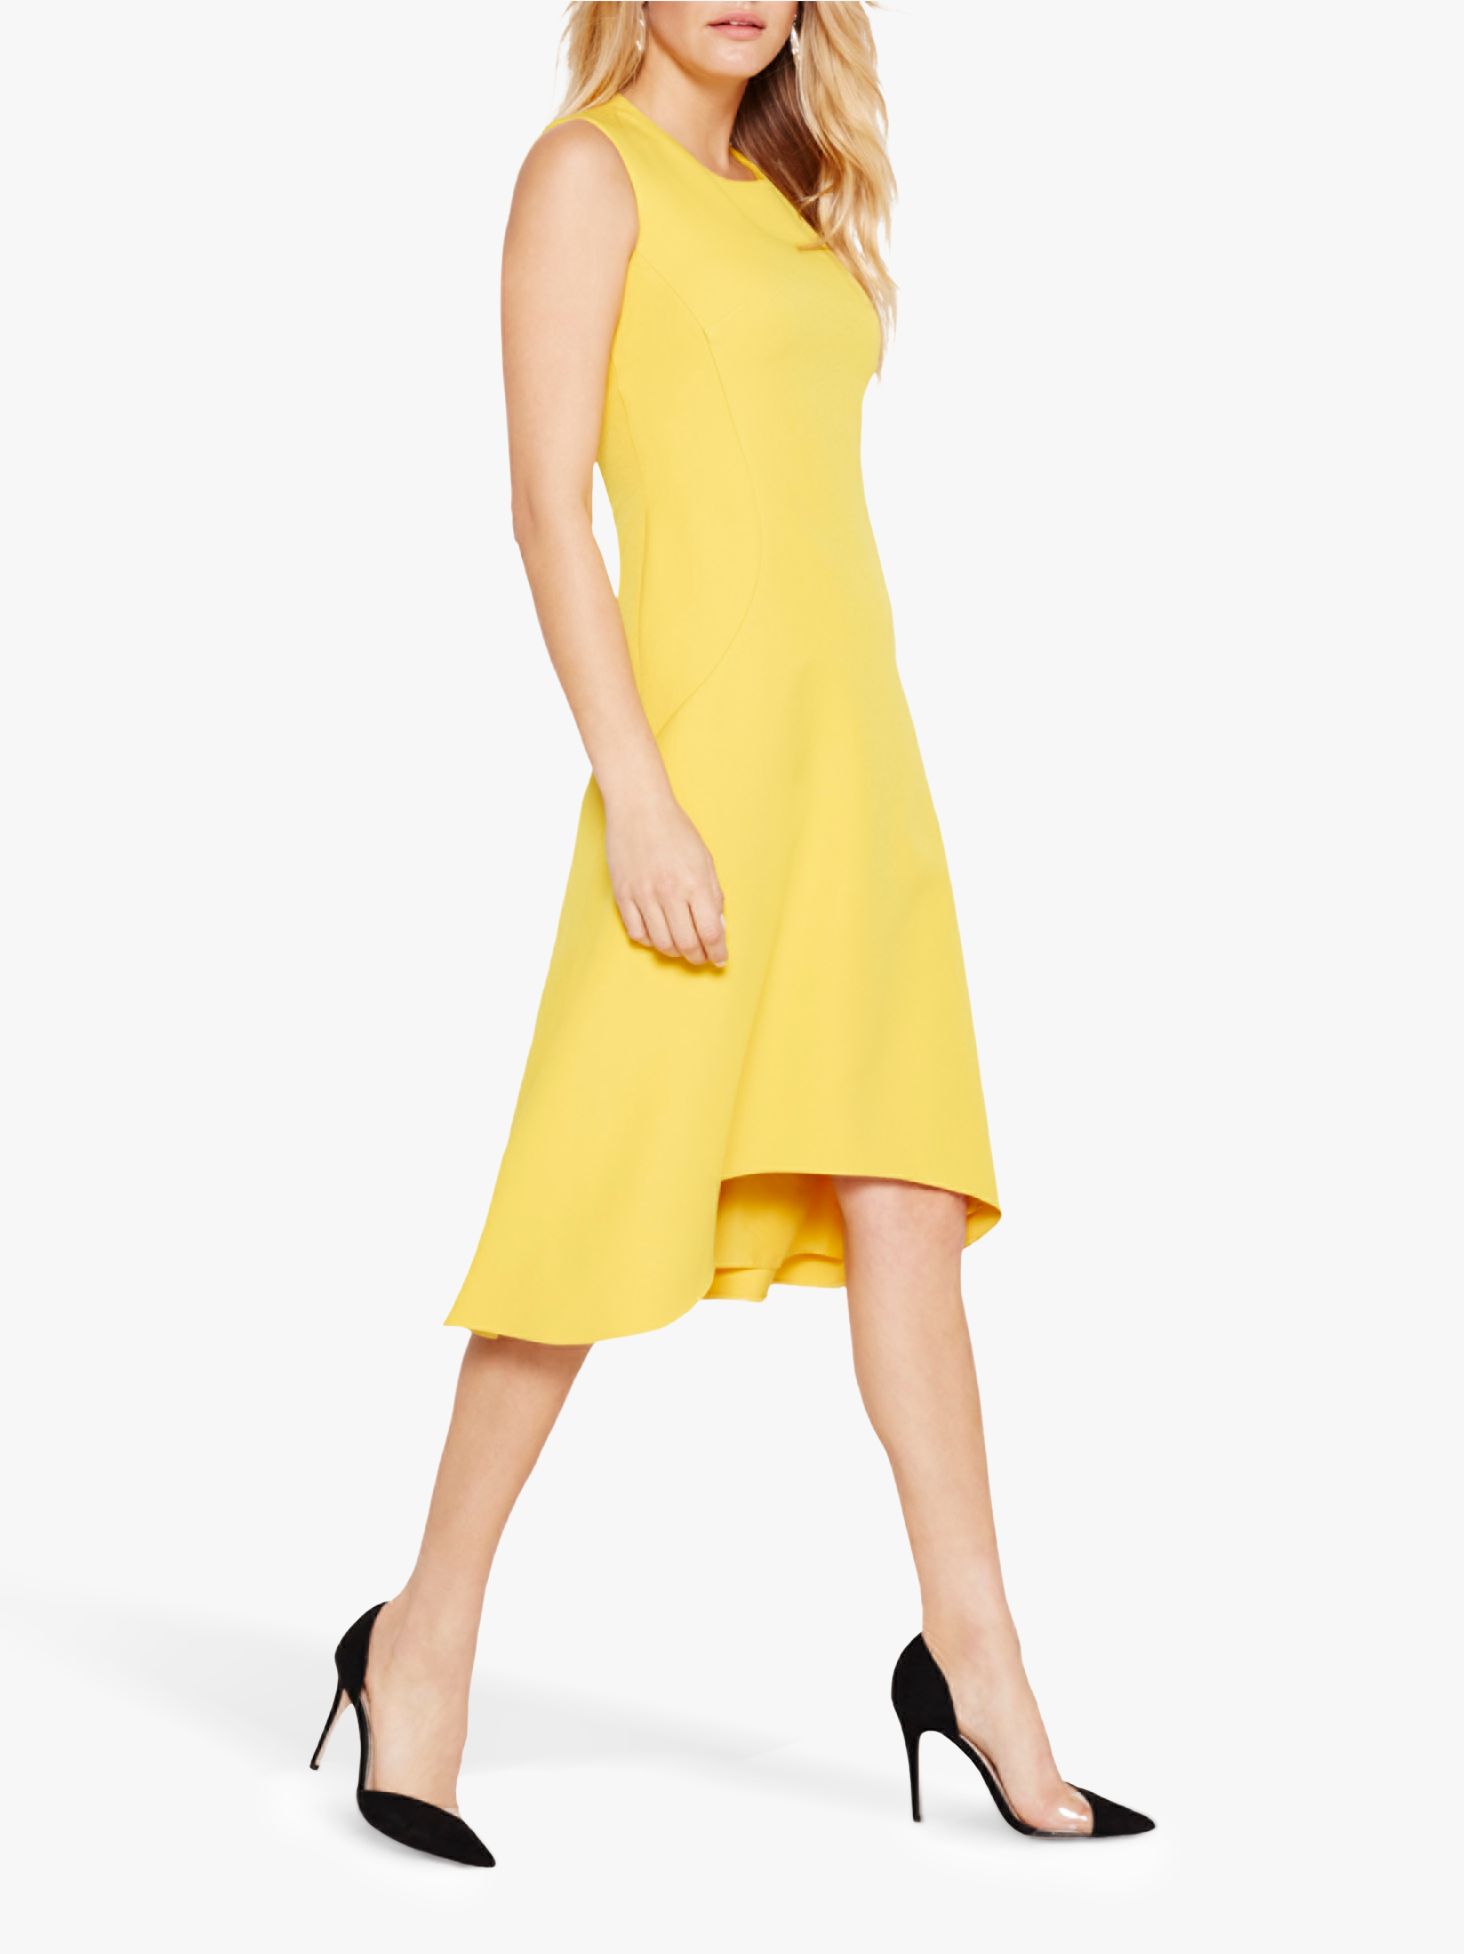 camilla yellow dress